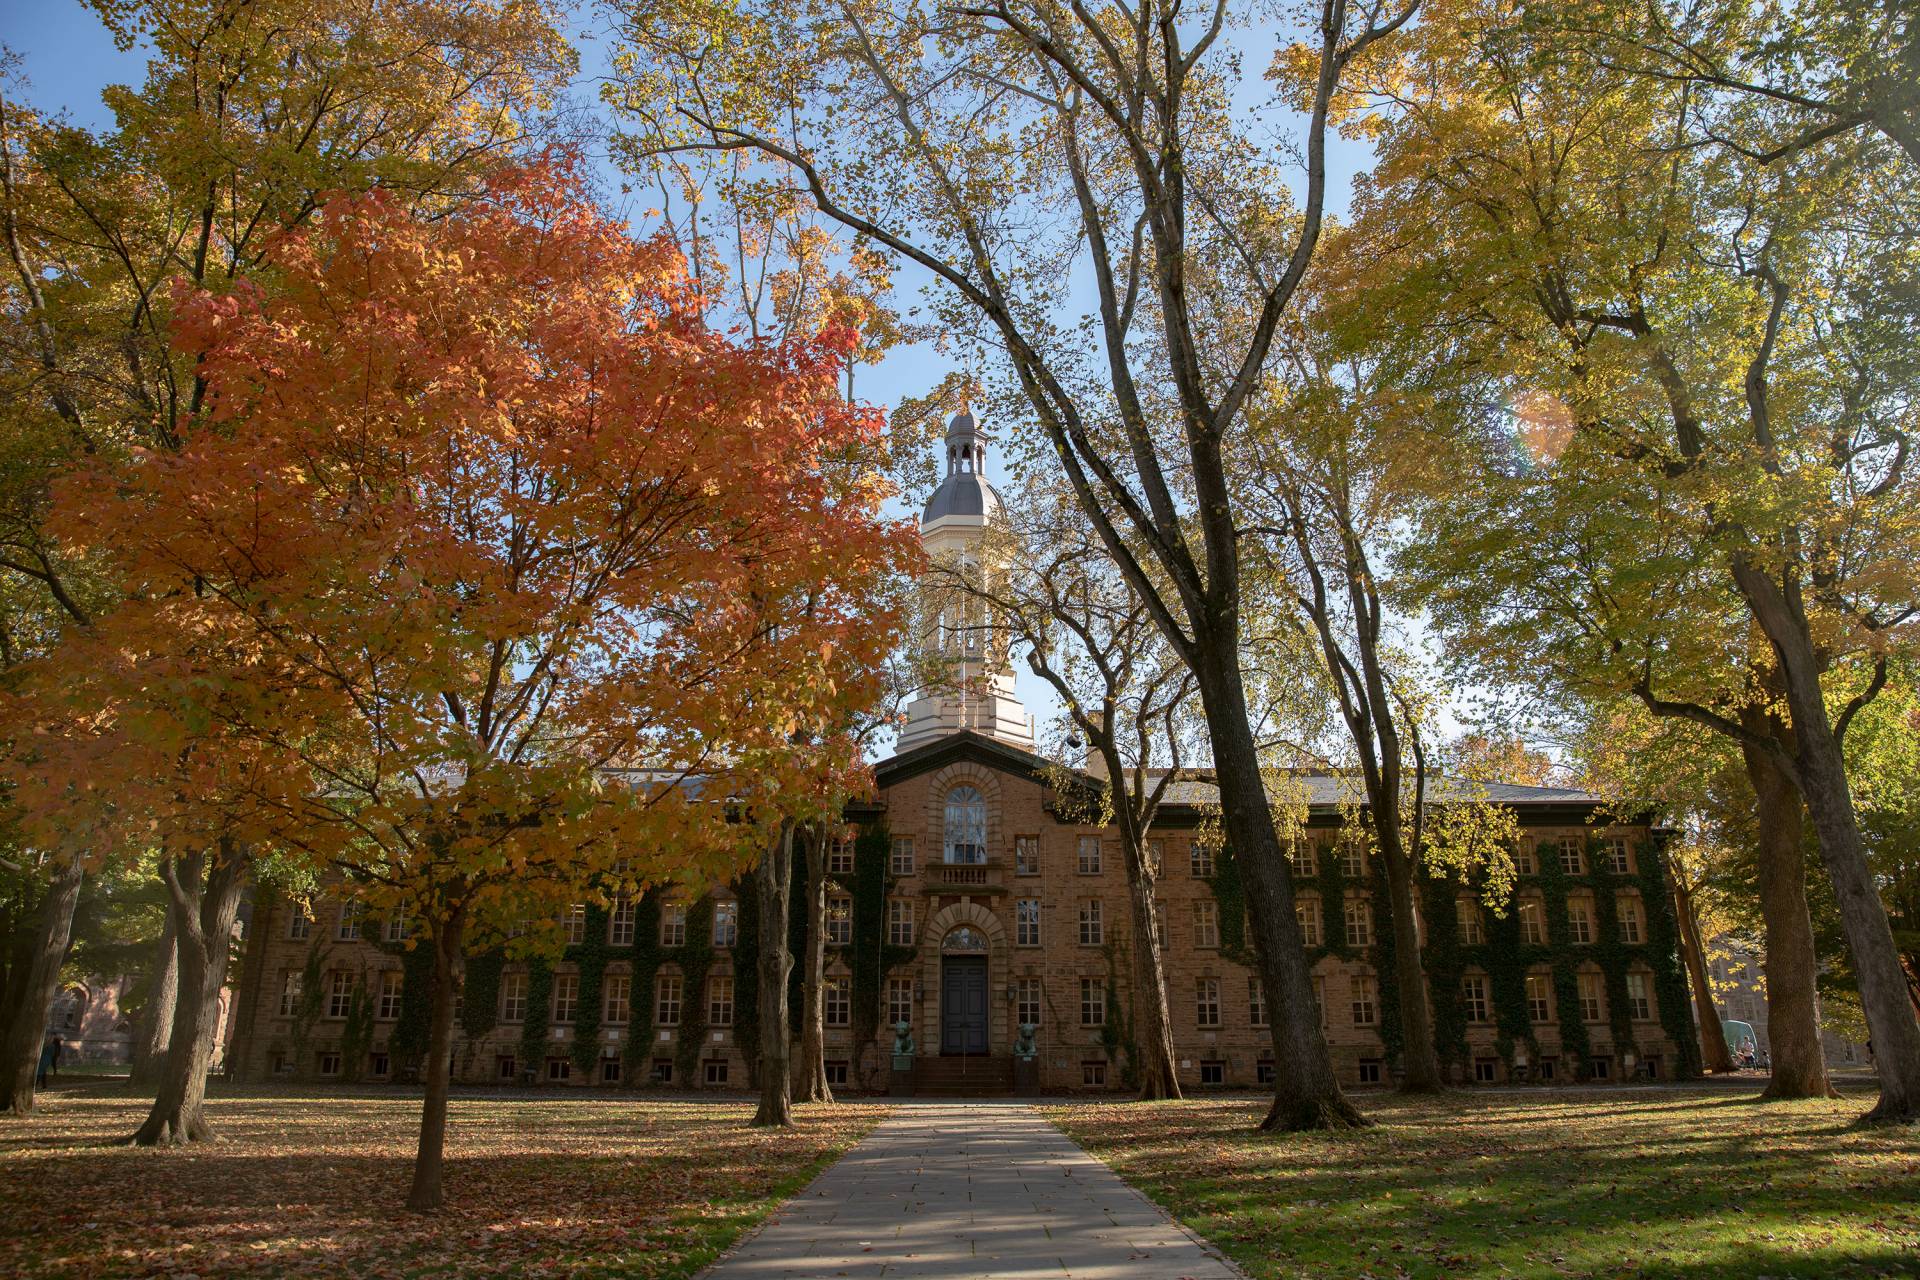 Nassau Hall in autumn